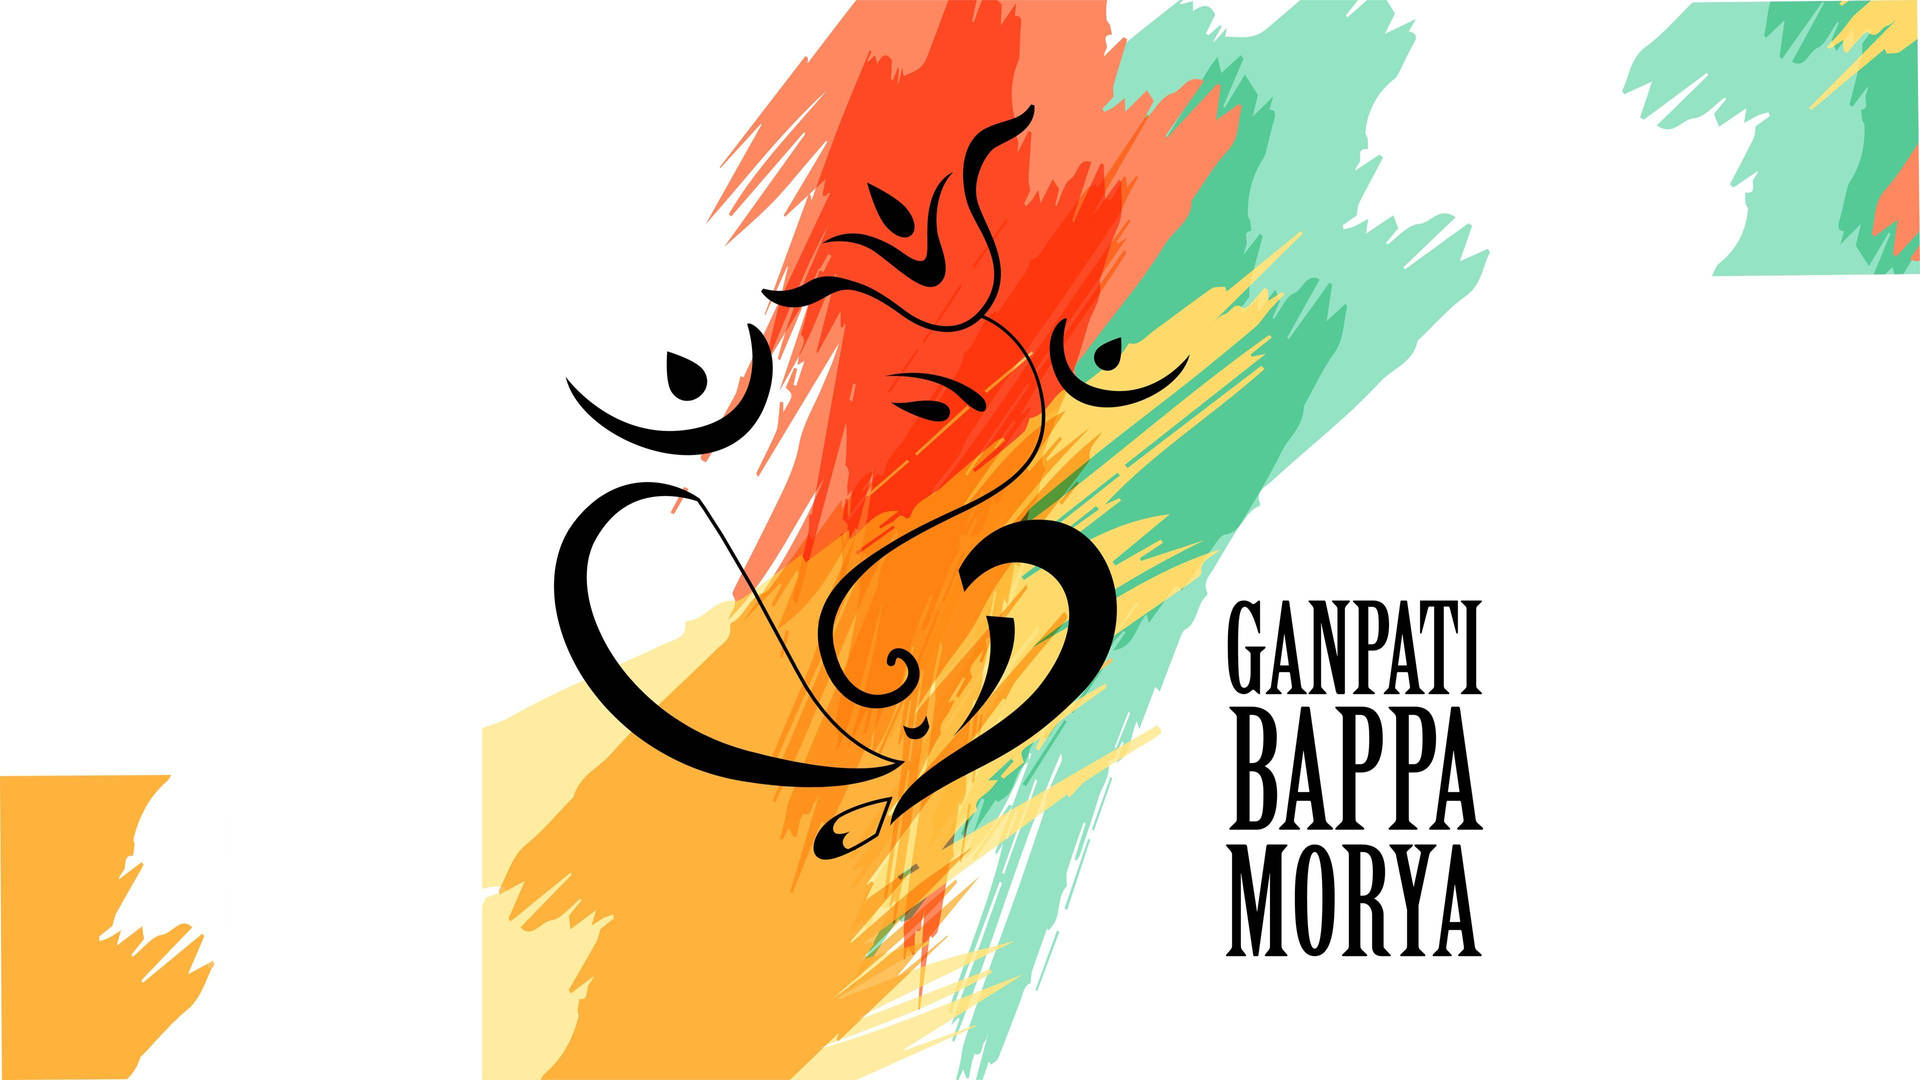 Ganpatibappa Morya 4k Poster: Ganpati Bappa Morya 4k Affisch. Wallpaper